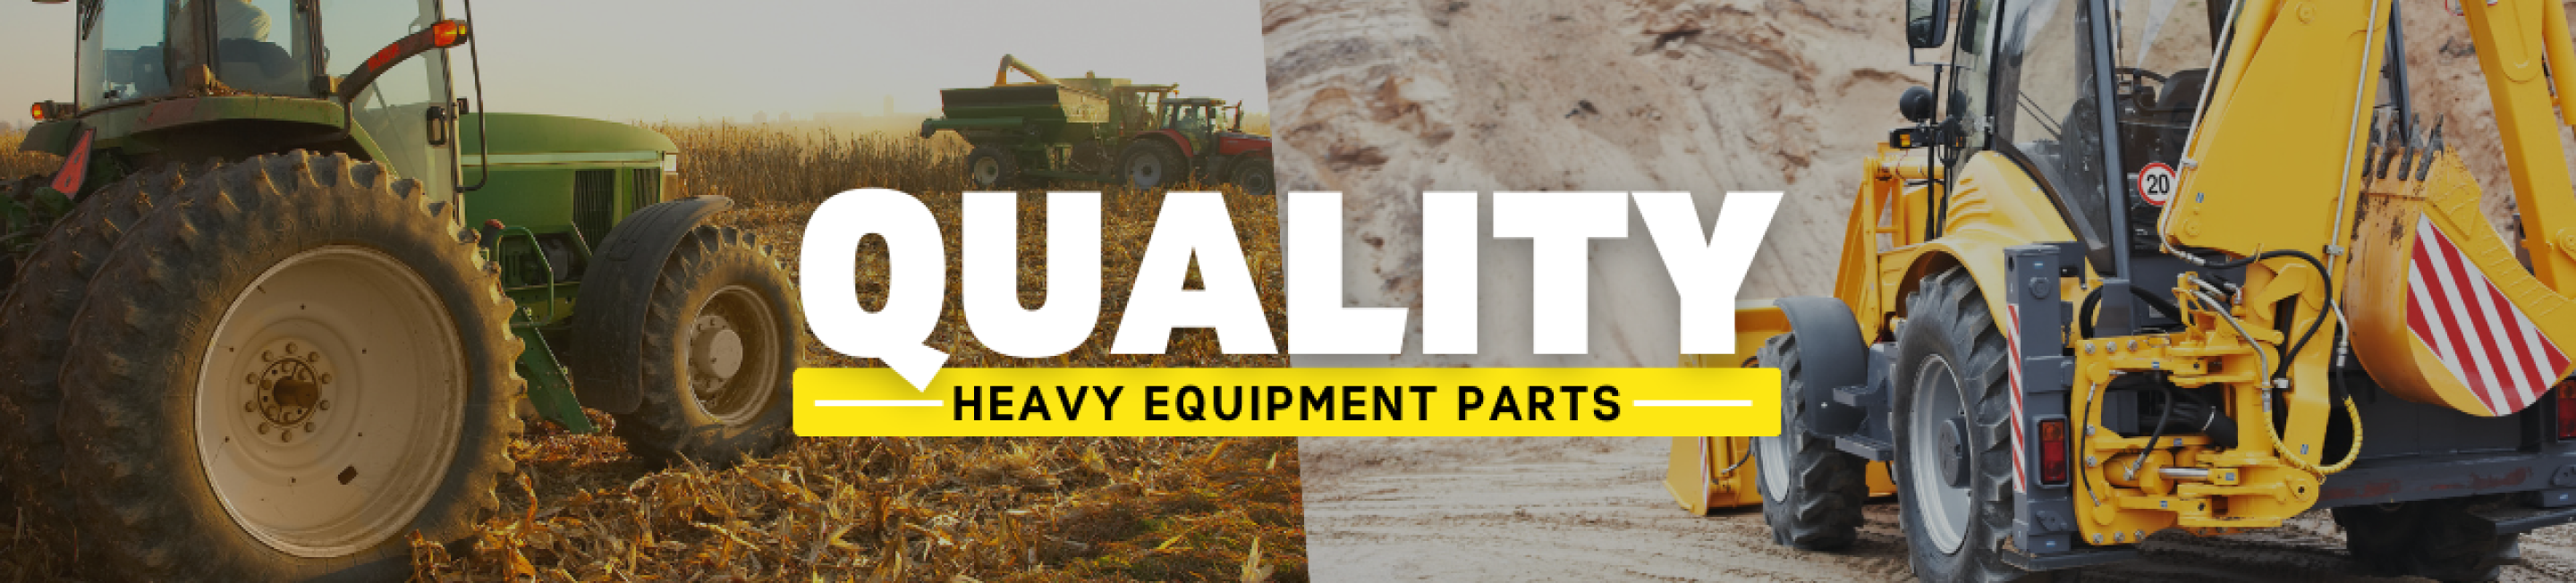 Quality Heavy Equipment Parts Image